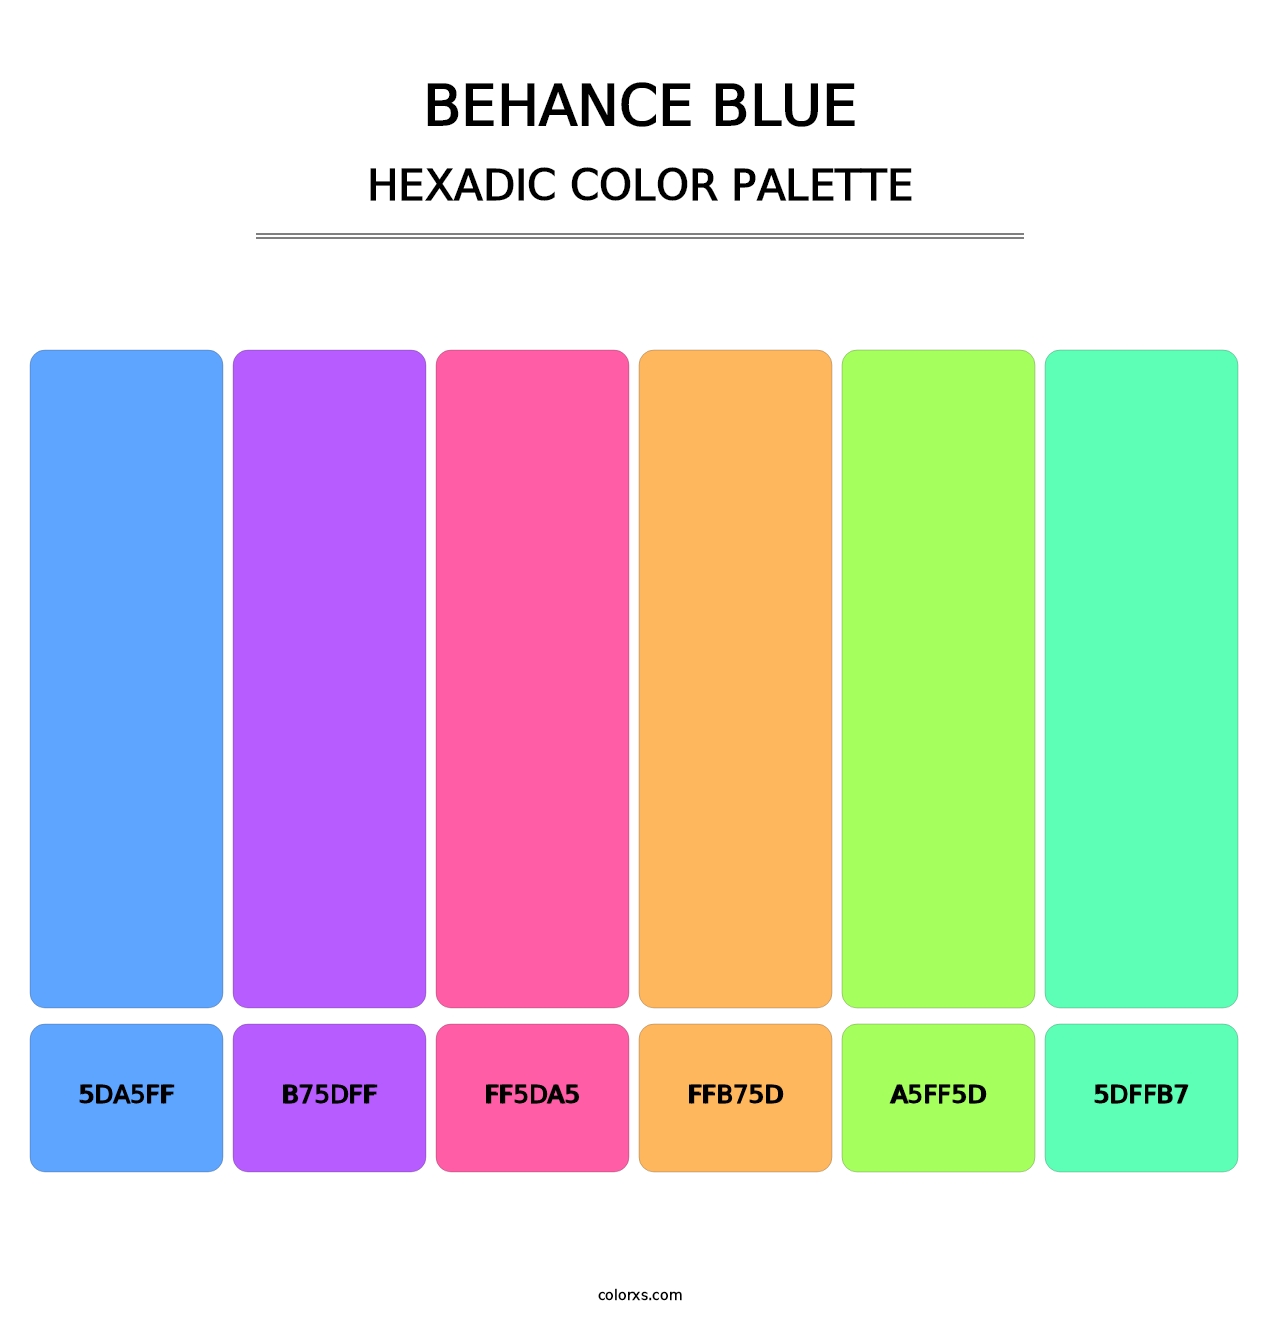 Behance Blue - Hexadic Color Palette